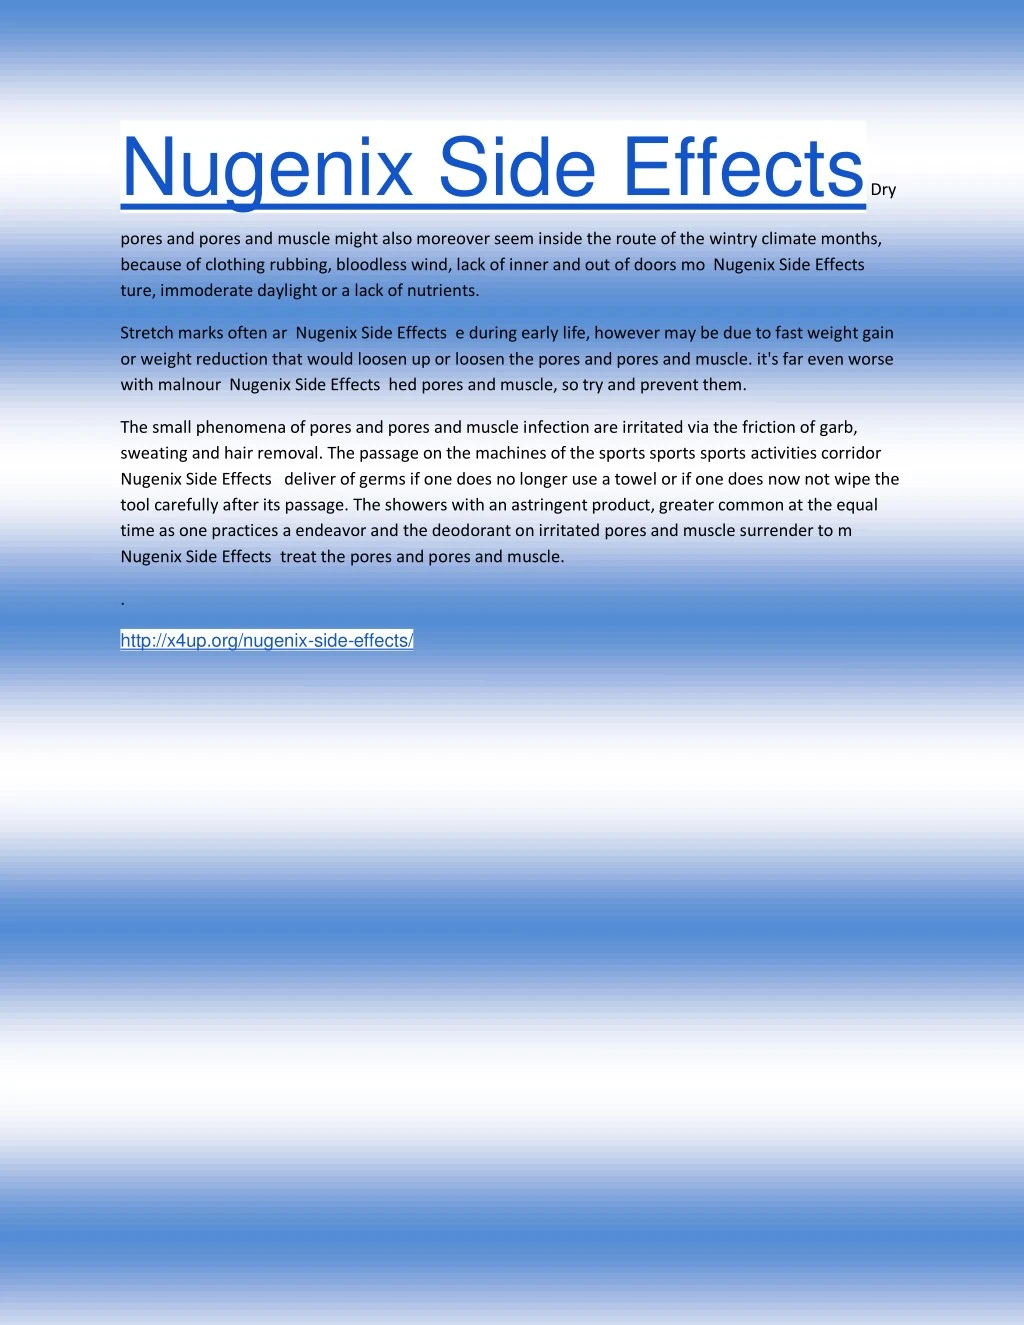 nugenix side effects dry